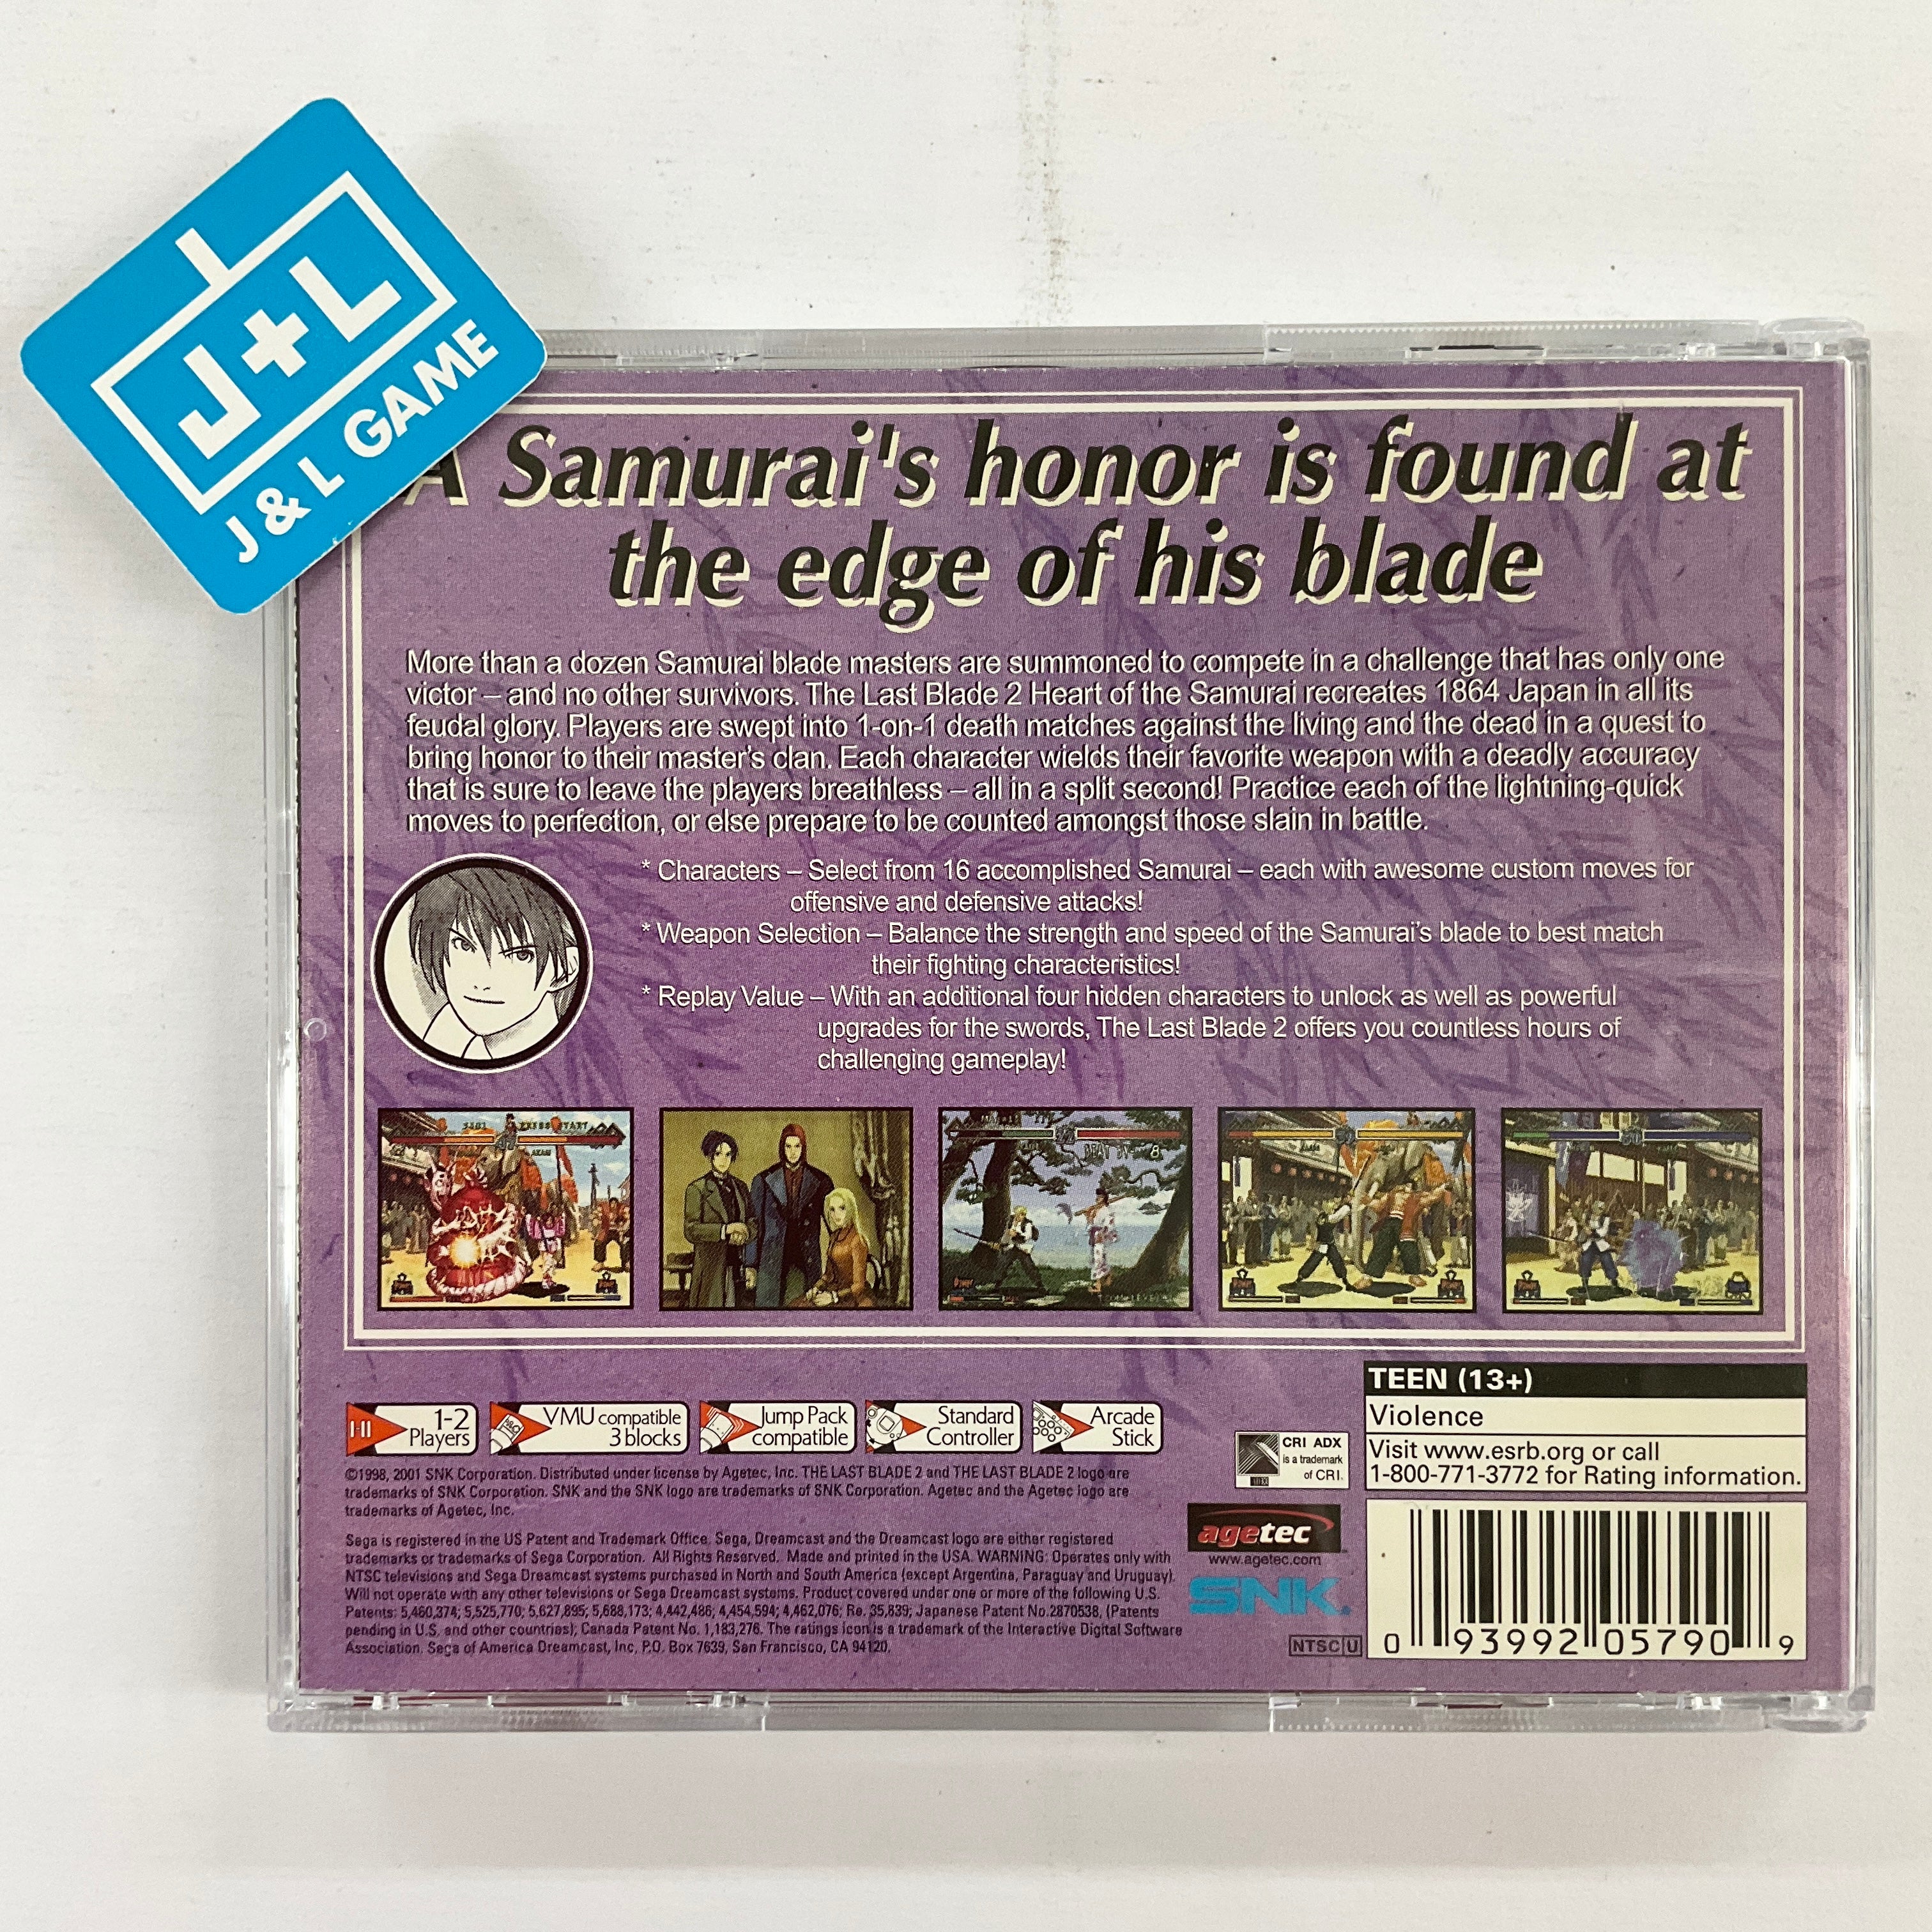 The Last Blade 2: Heart of the Samurai - (DC) SEGA Dreamcast  [Pre-Owned] Video Games Agetec   